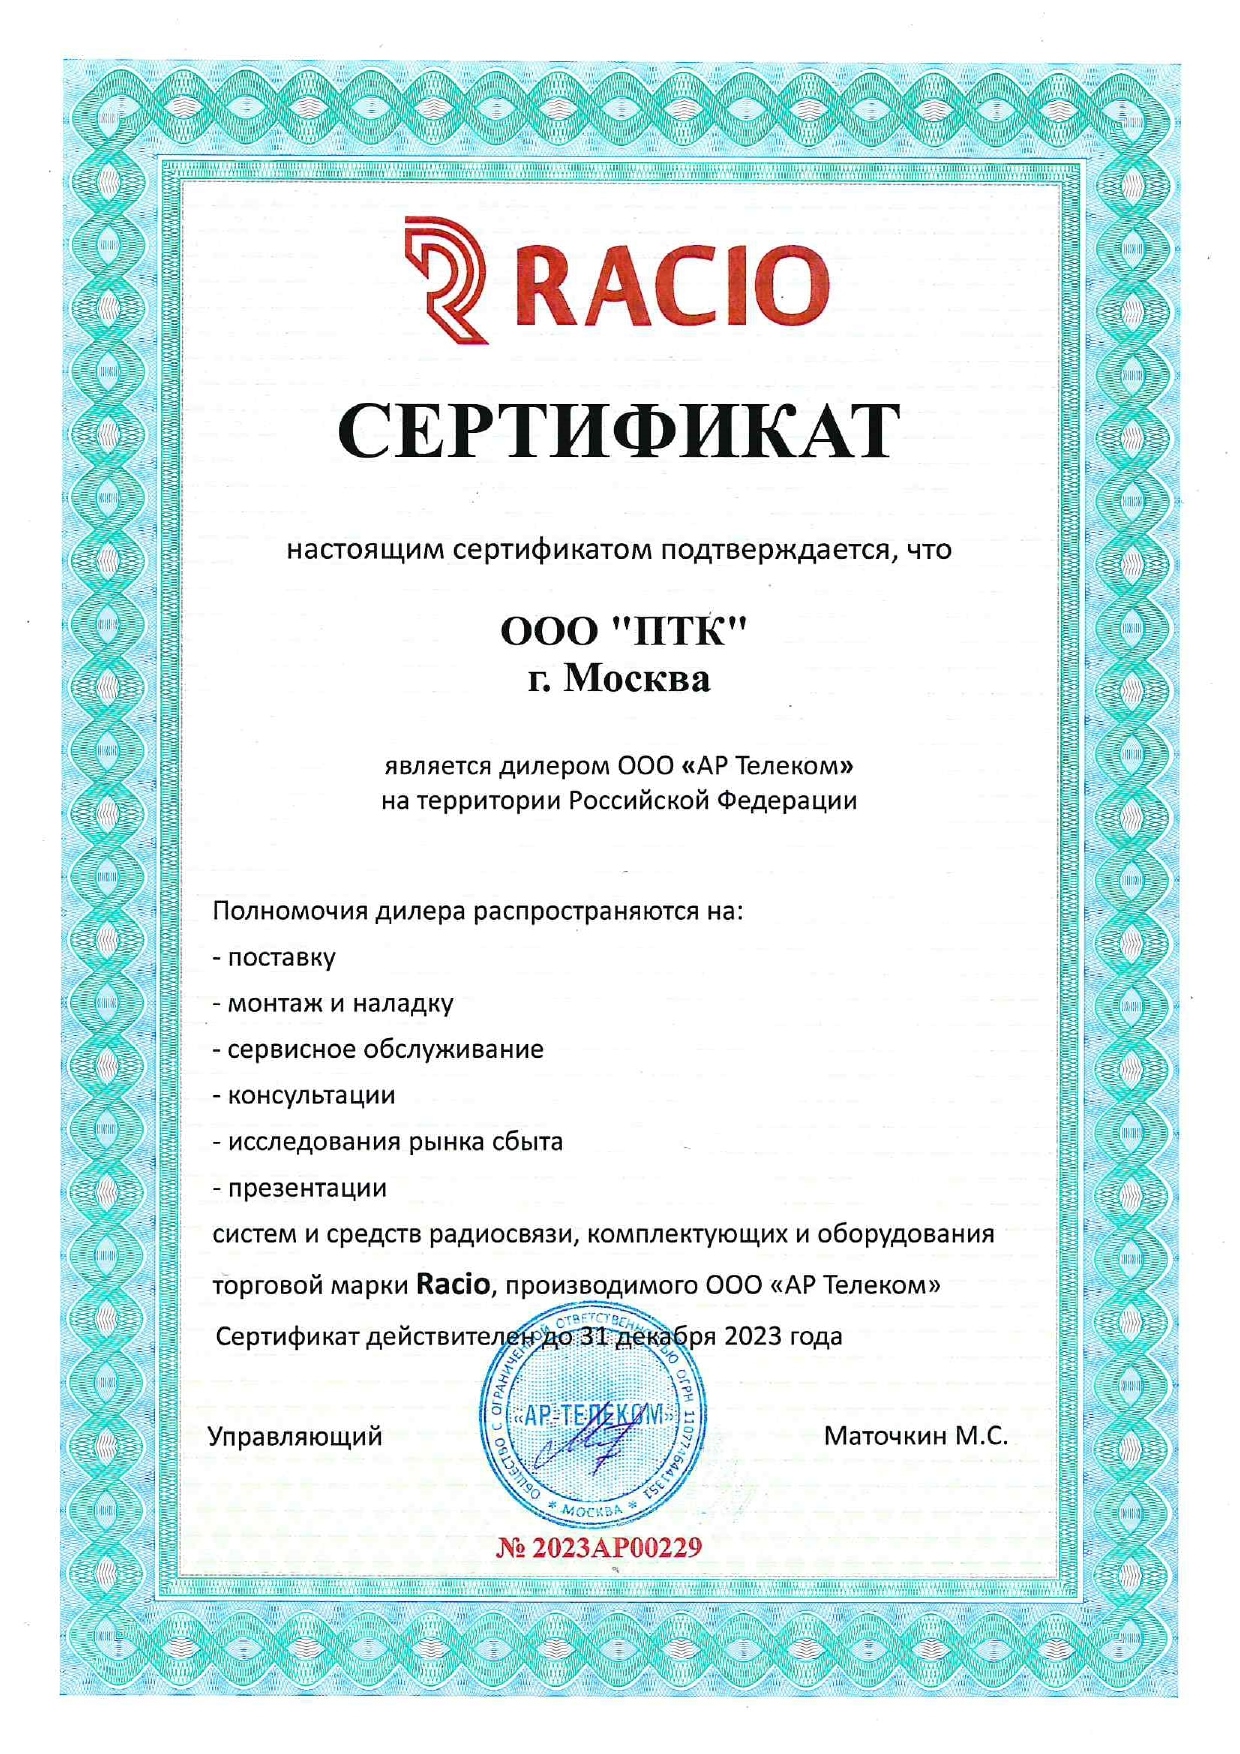 Сертификат дилера по Racio ООО ПТК на 2023 г page 0001